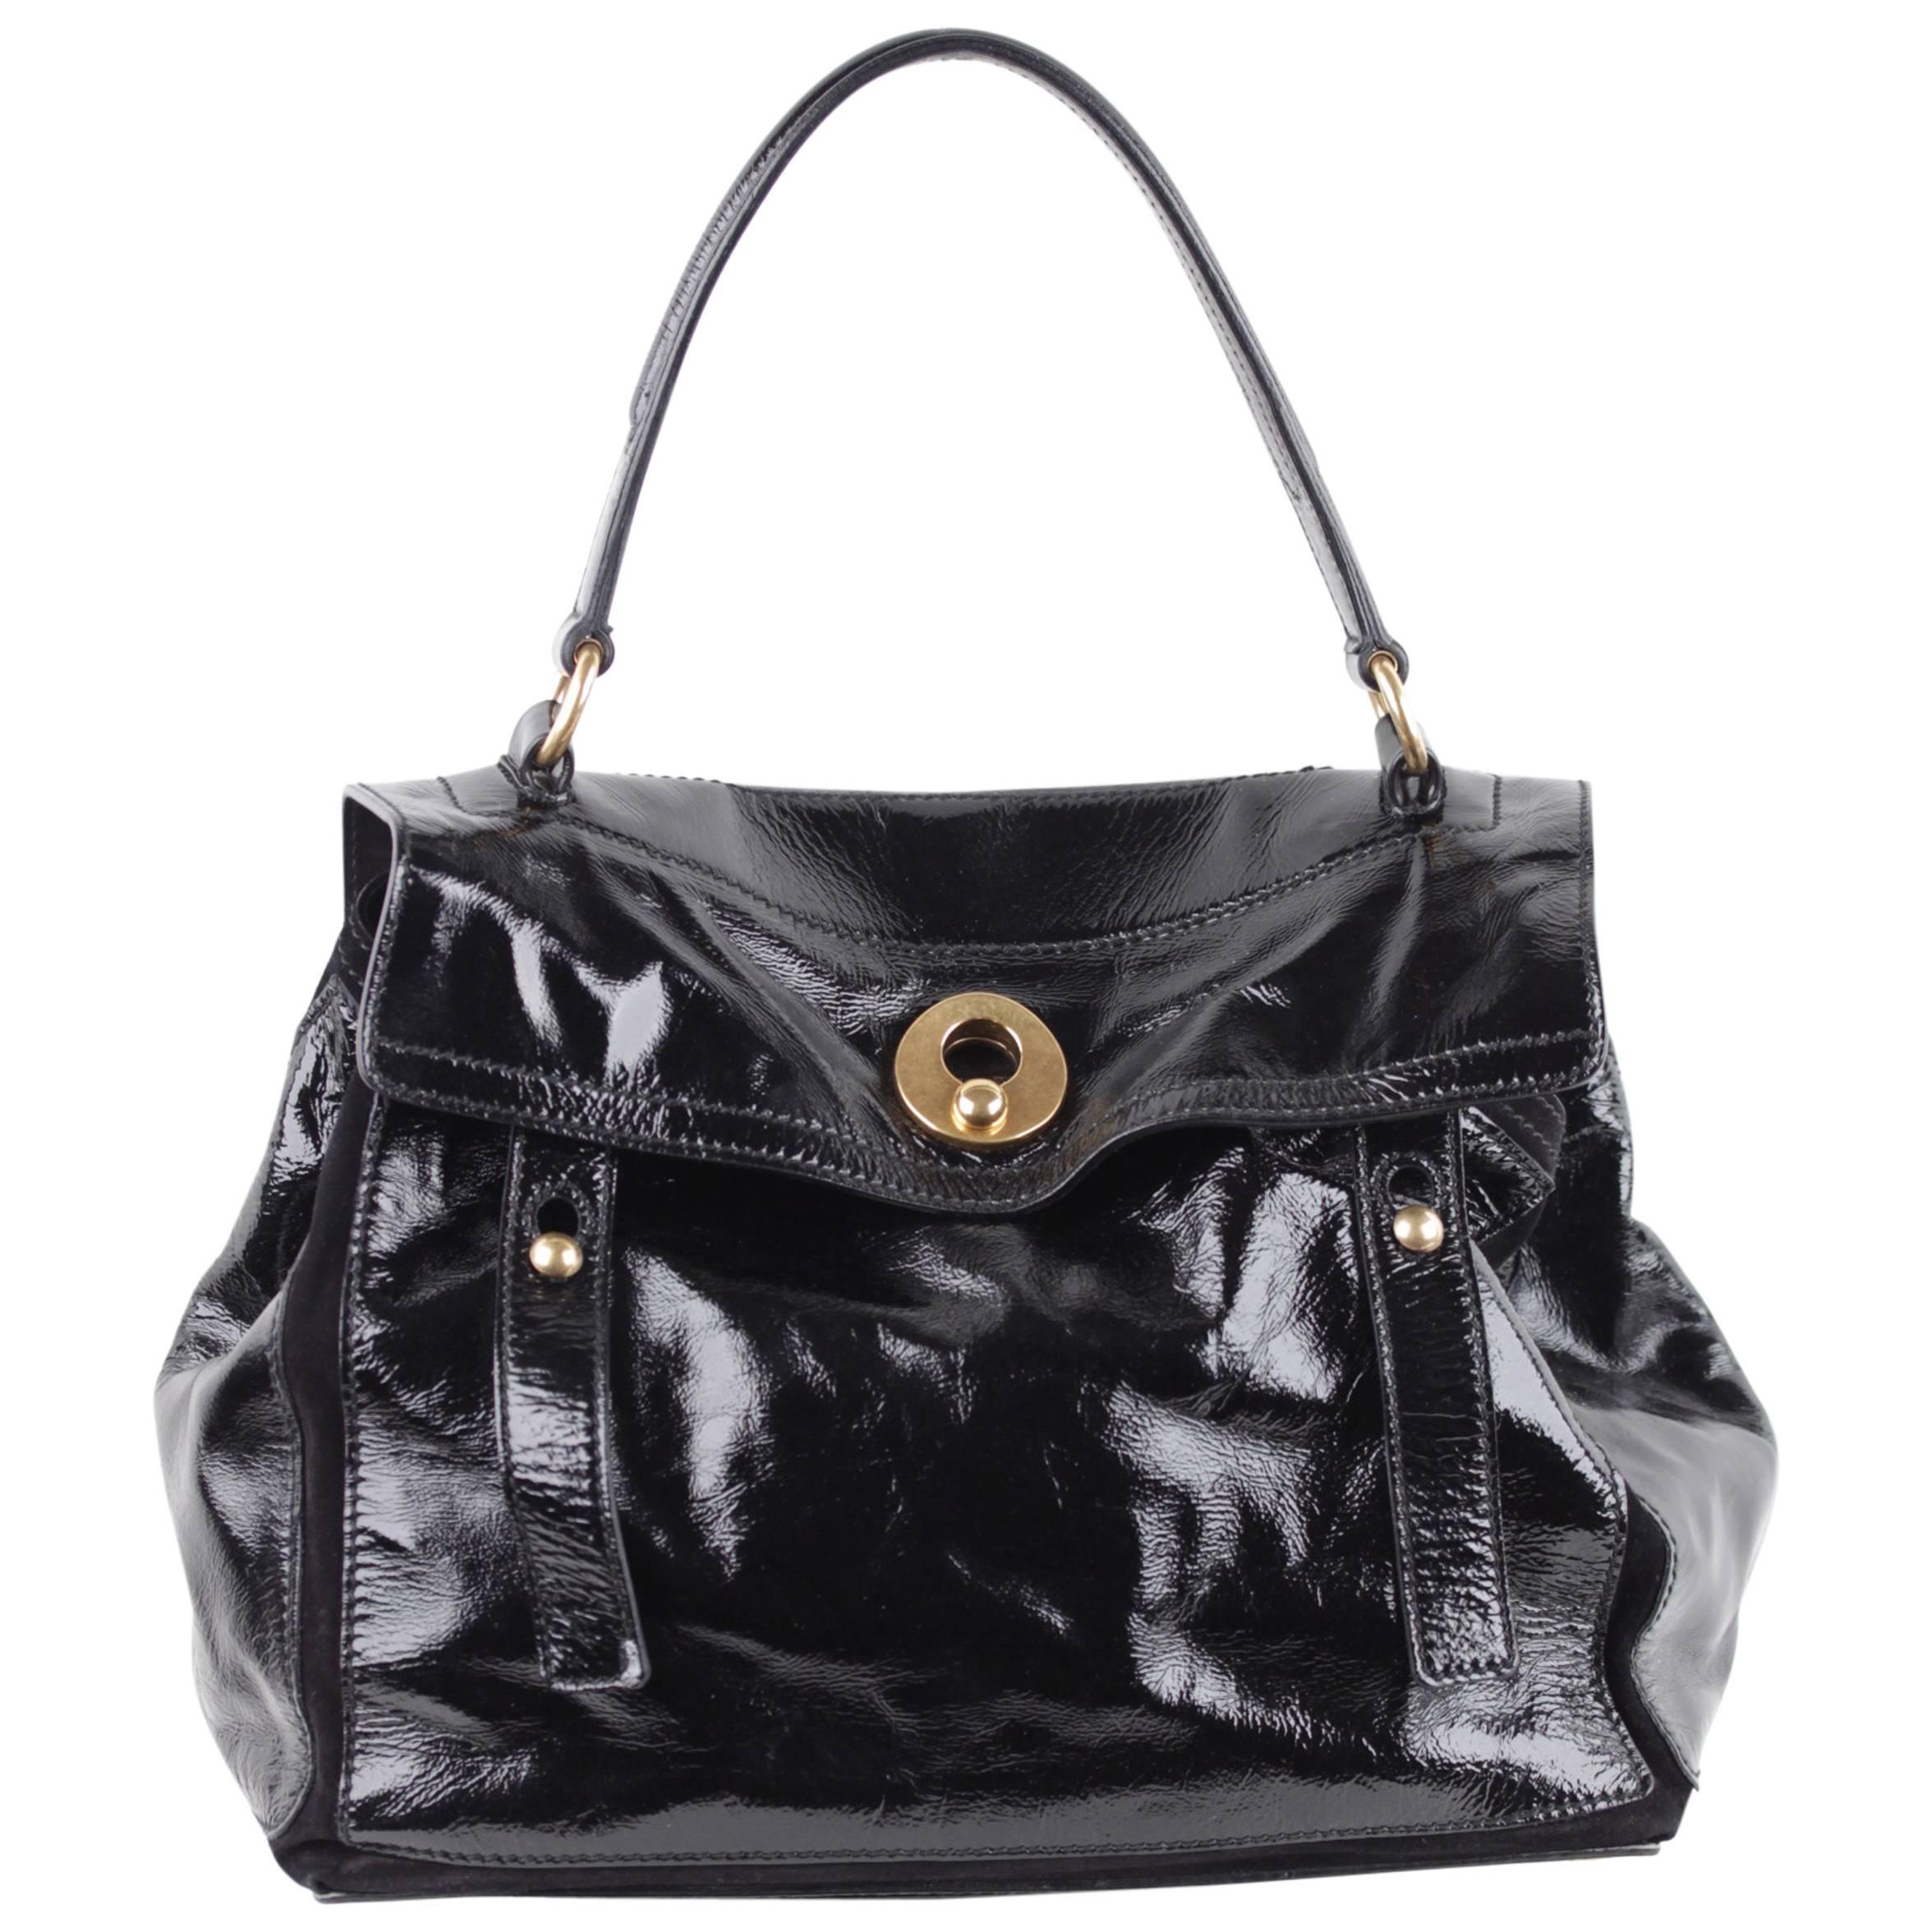 YVES SAINT LAURENT Black Patent Leather MUSE TWO 2 Satchel TOTE Handbag